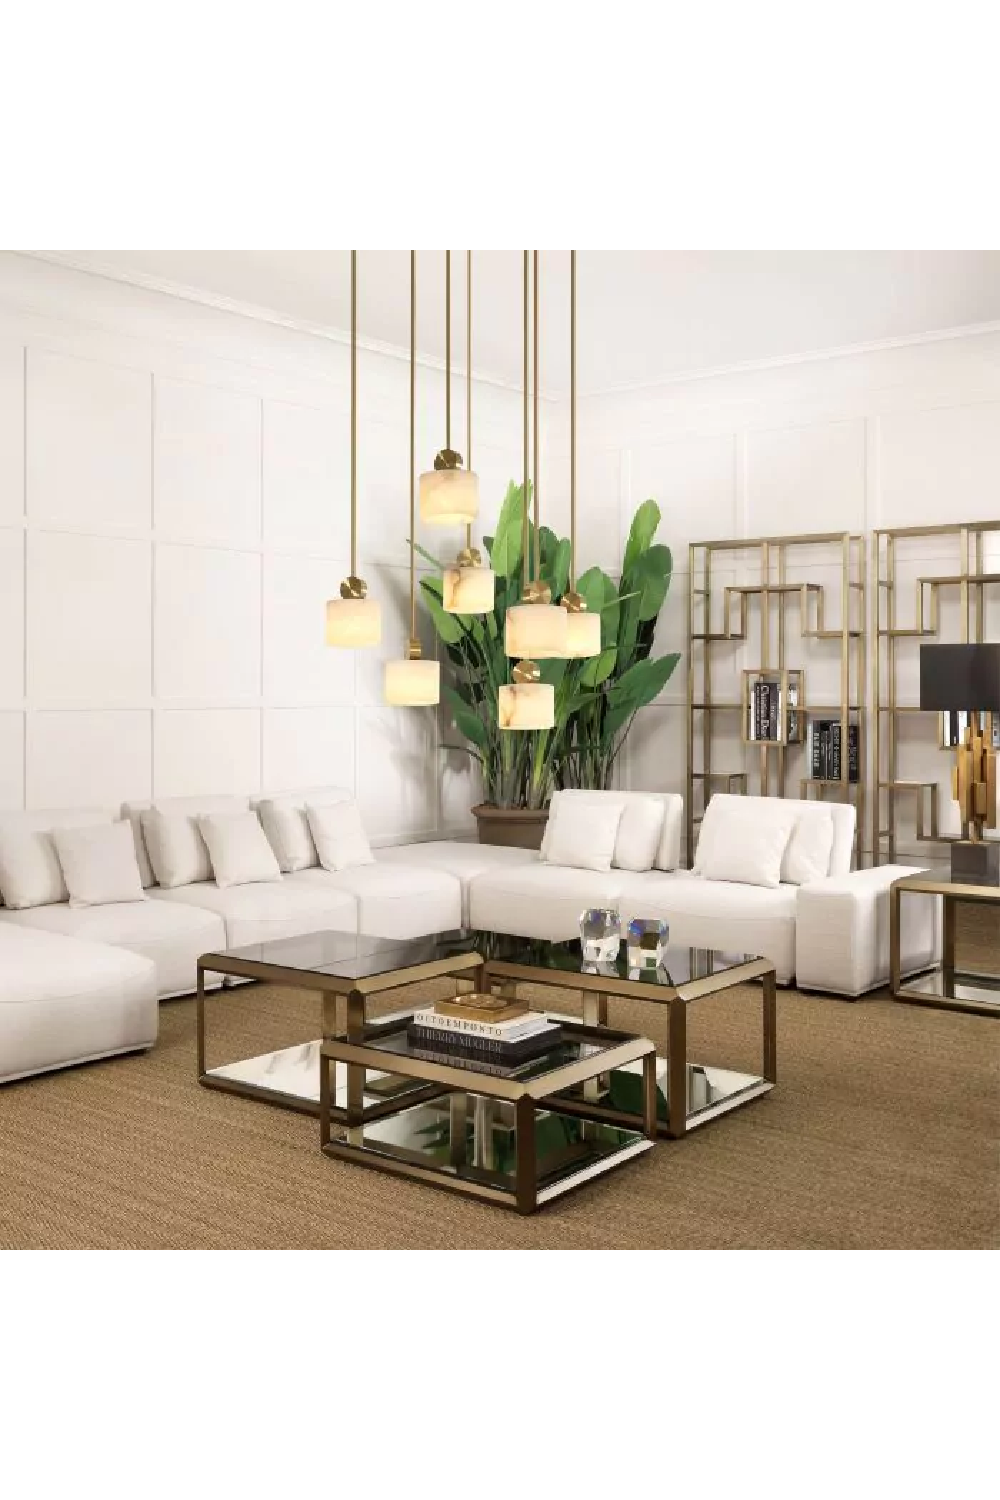 Multi-Level Decorative Cabinet | Eichholtz Lagonda | #1 Eichholtz Retailer 